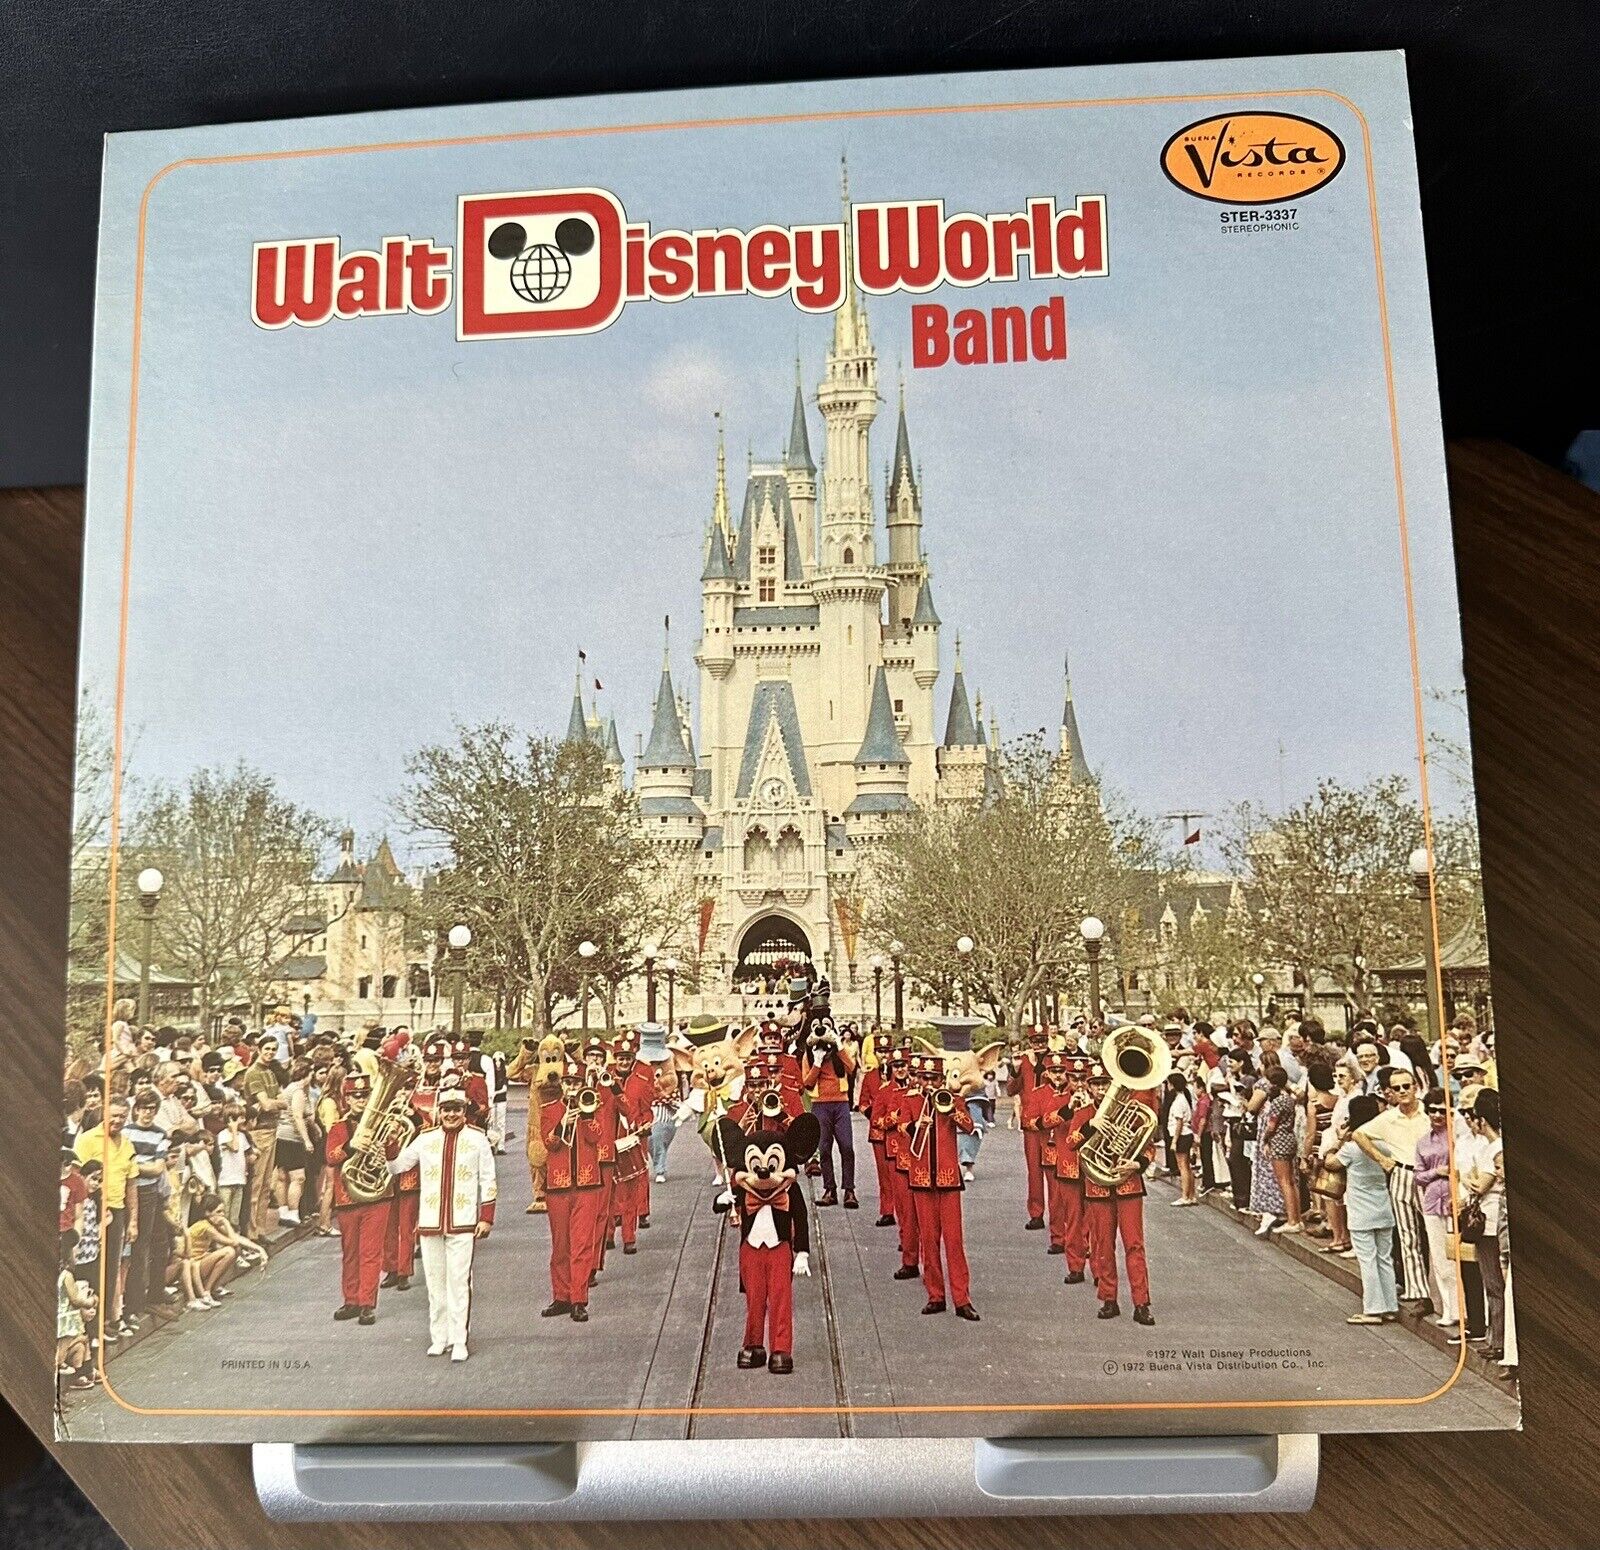 VTG RARE 1972 WALT DISNEY WORLD BAND RECORD ALBUM BUENA VISTA RECORDS STER 3337